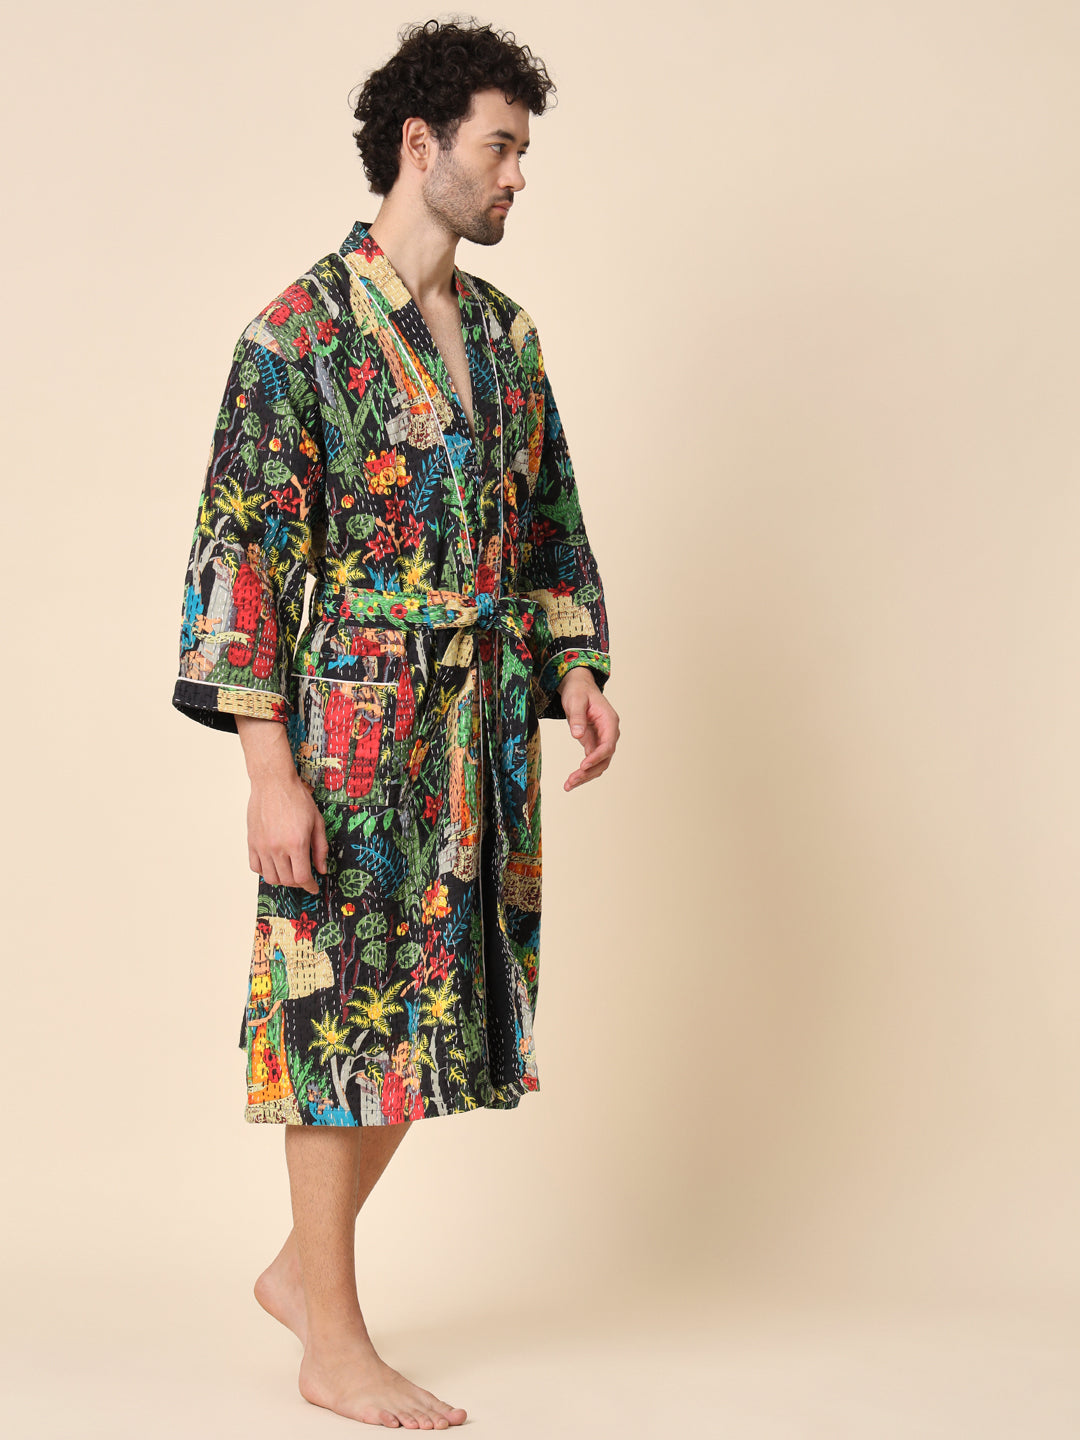 Men's Multicolored Frida Kahlo printed bathrobe - TREND-MATTERS